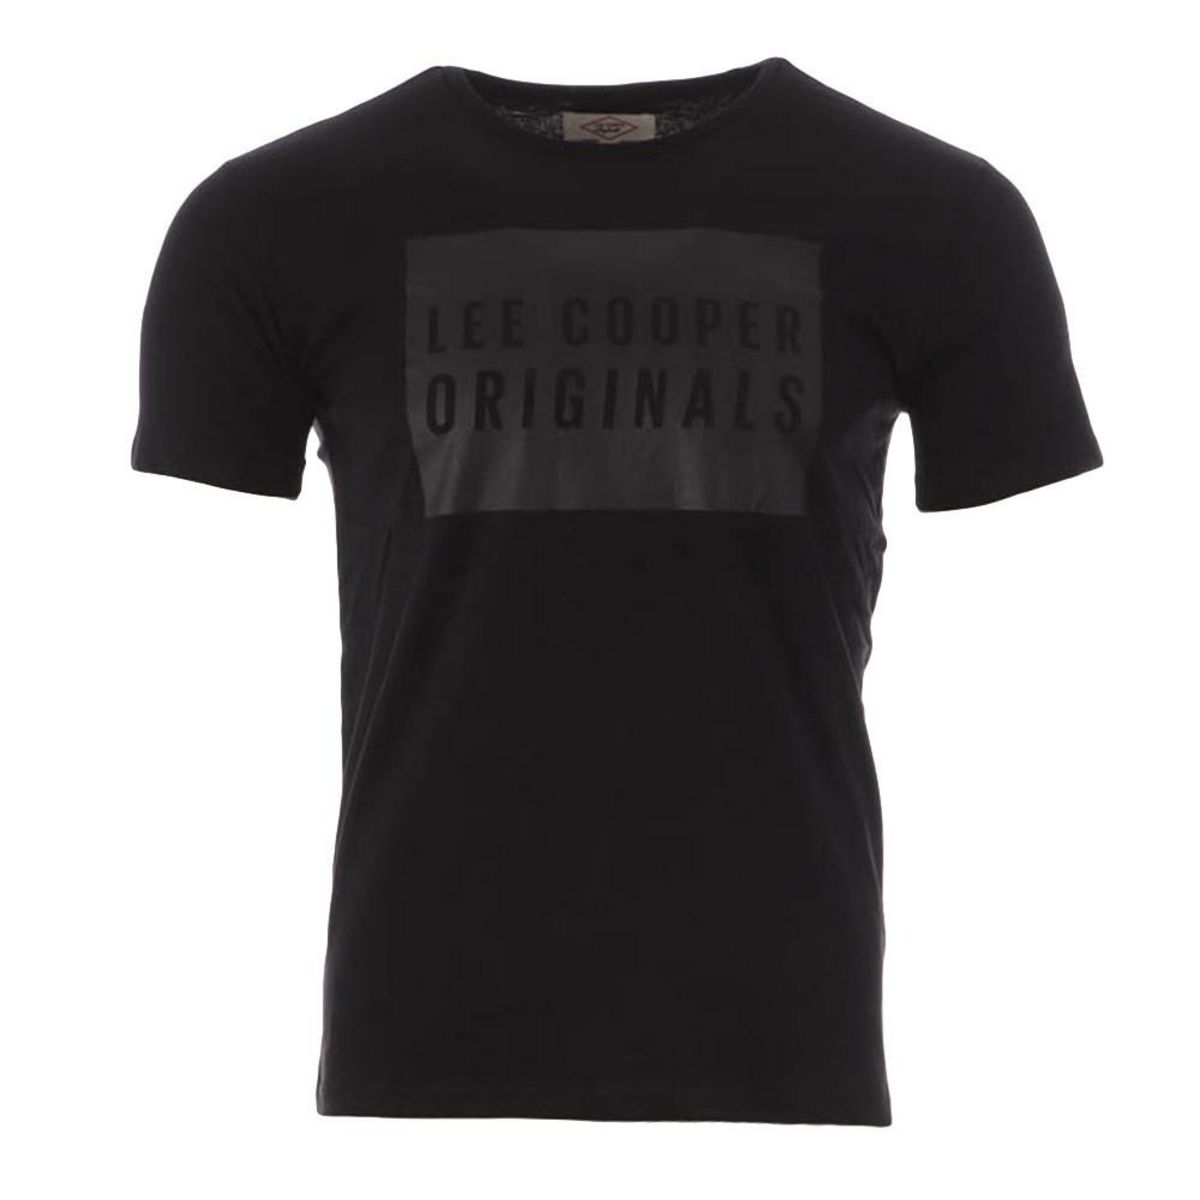  T-shirt Noir Homme Lee Cooper Opol